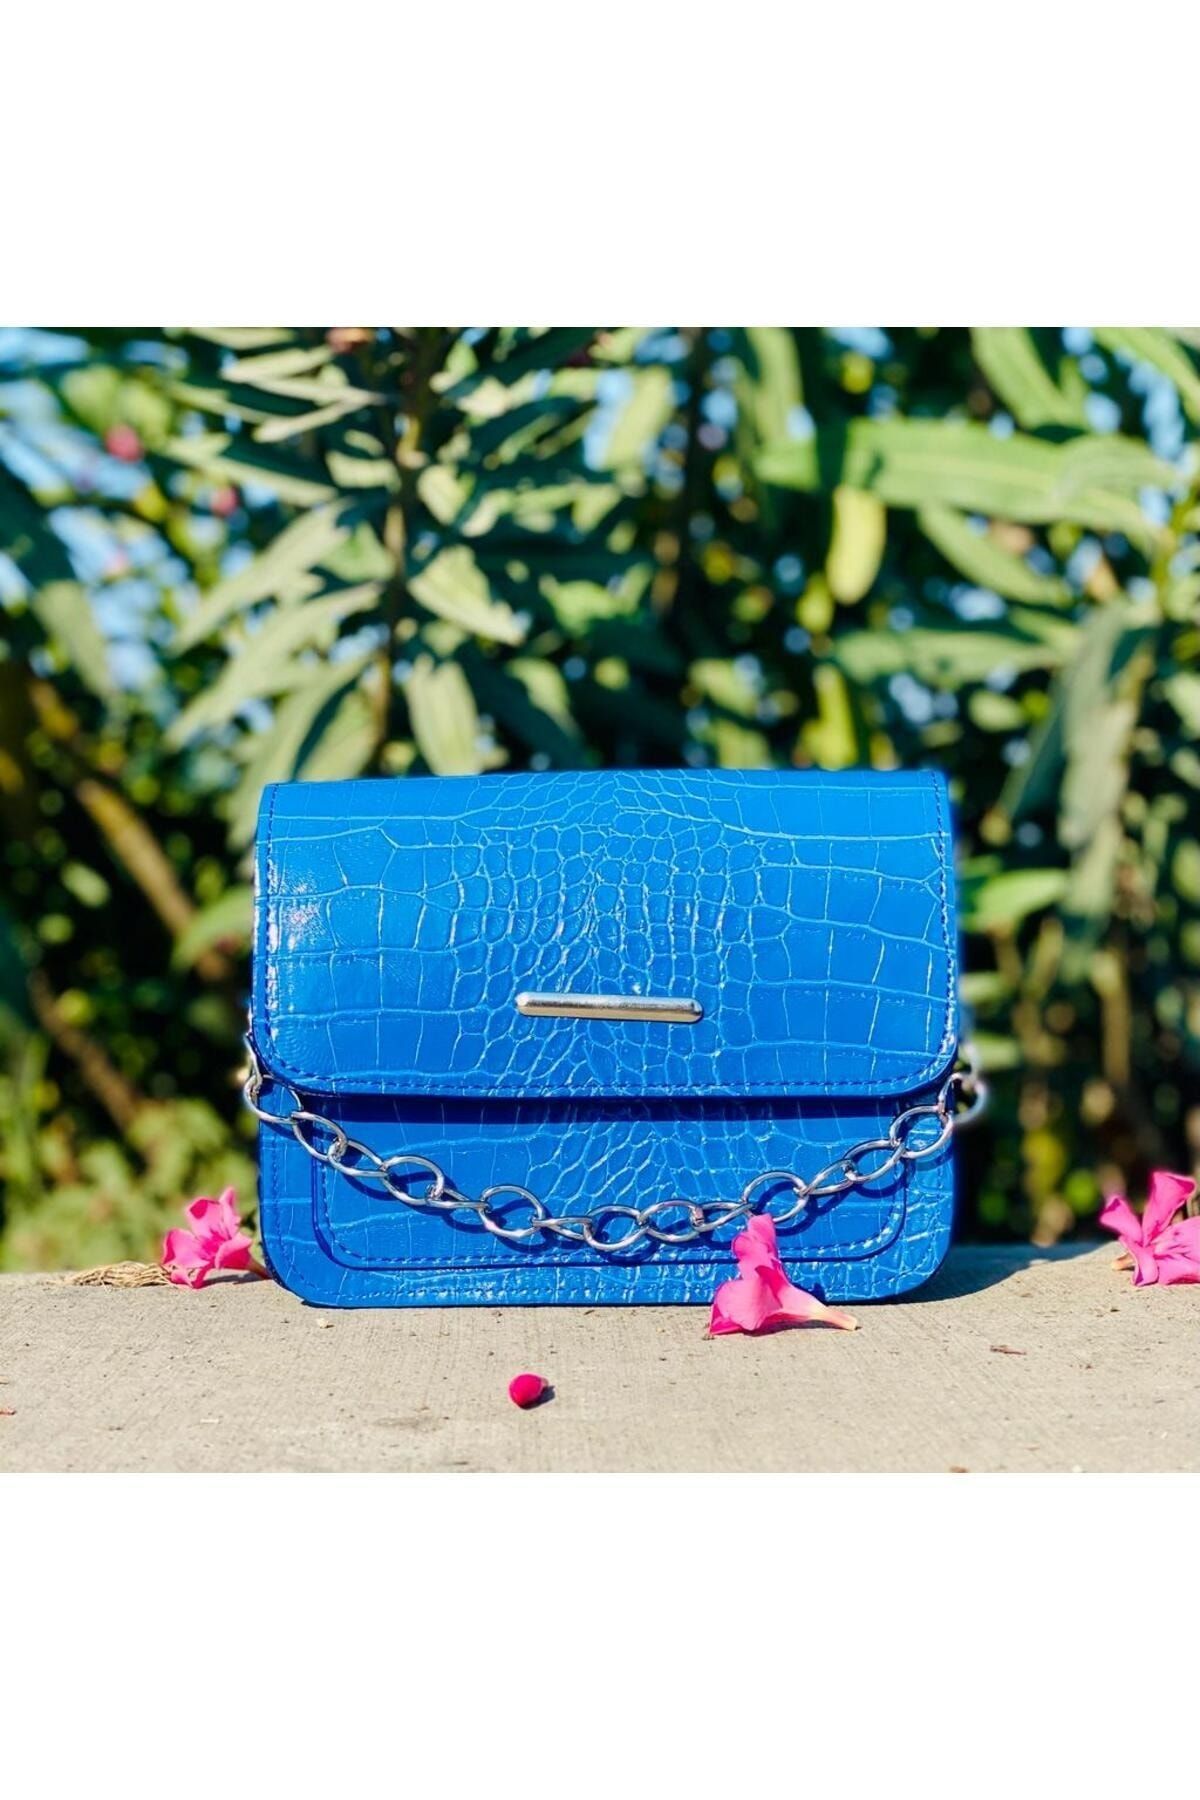 $1865 Maria Oliver Womens Blue Luisa Crocodile Leather Shoulder Clutch  Purse Bag | eBay